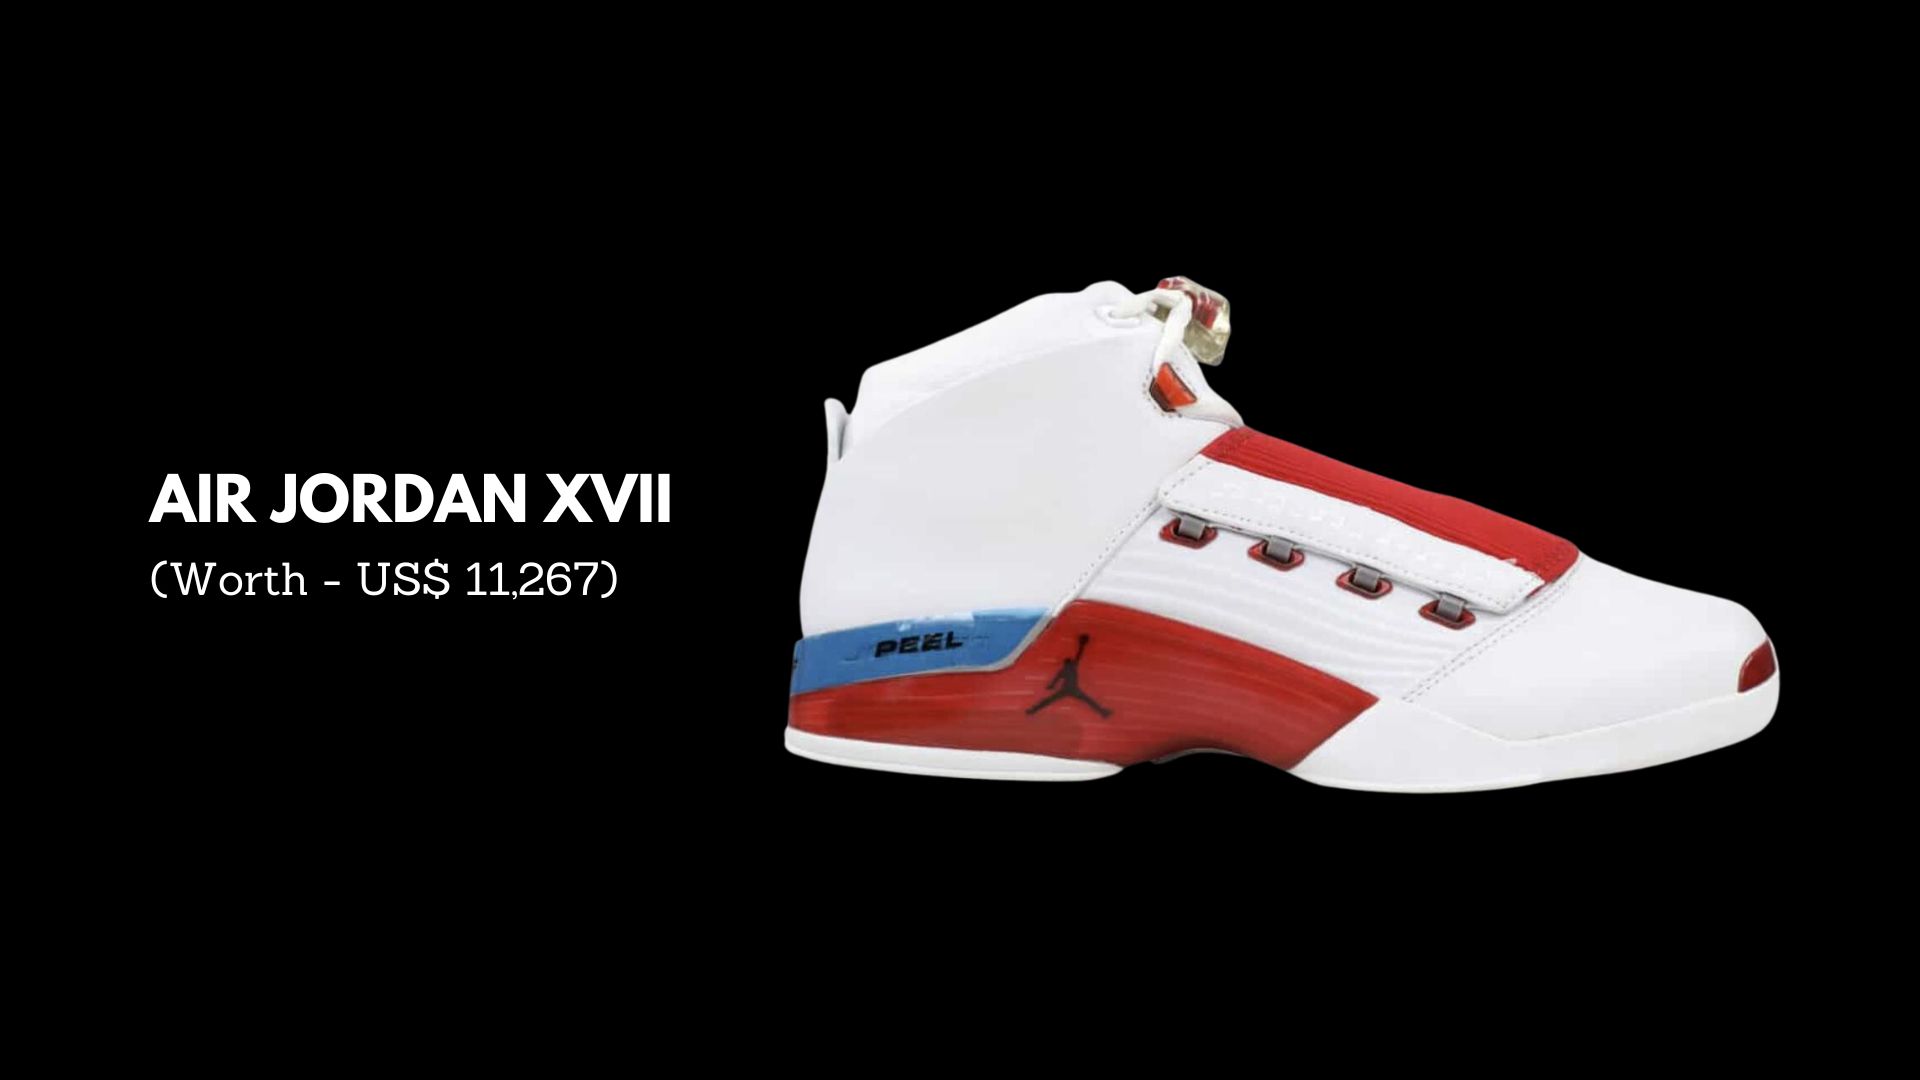 Air Jordan XVII (Worth - US$11,267) - Most Expensive Air Jordans